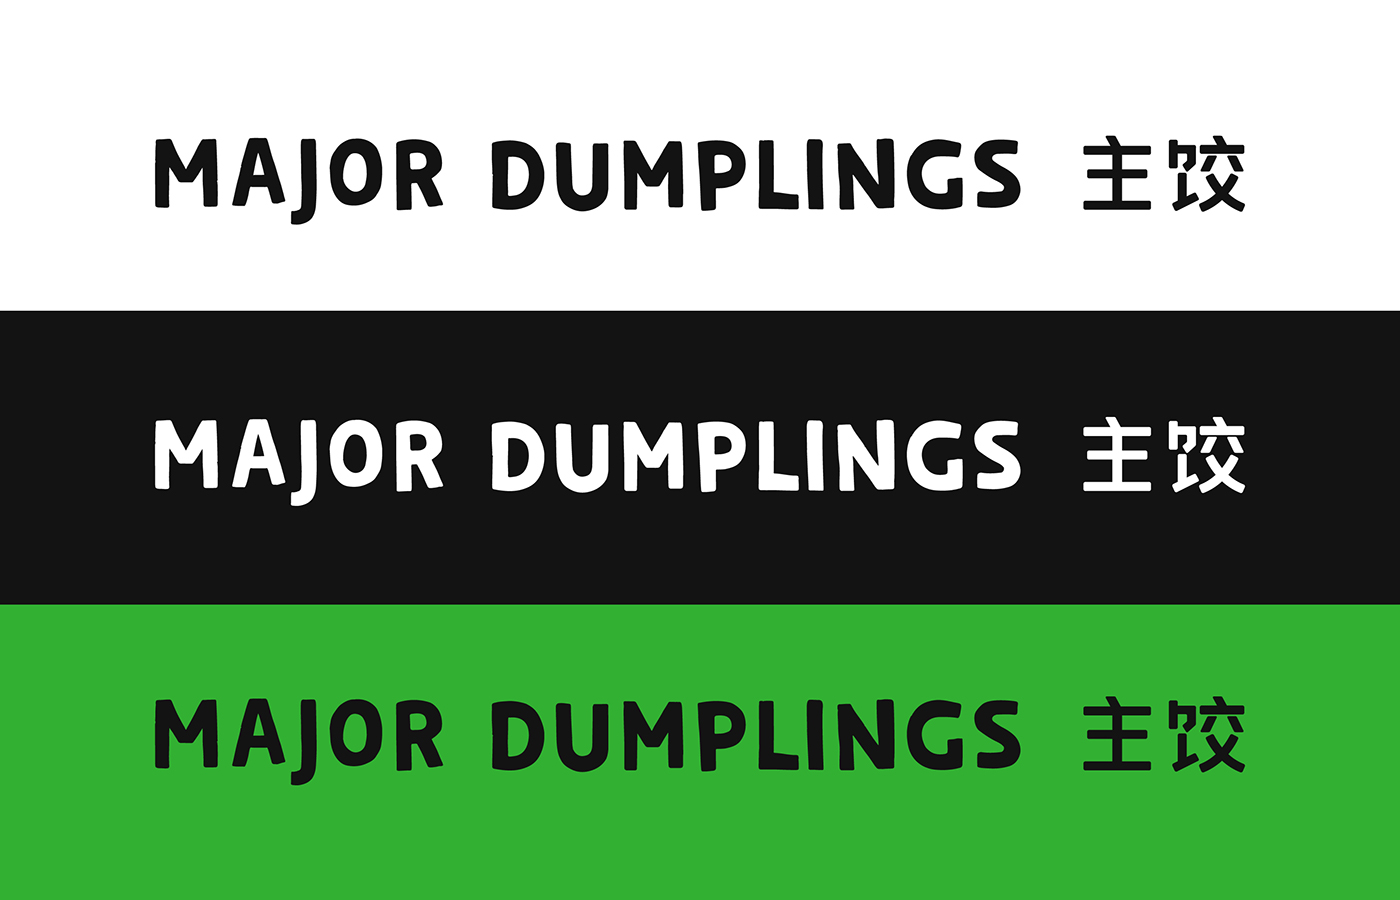 dumplings major foot china restaurant menu bake